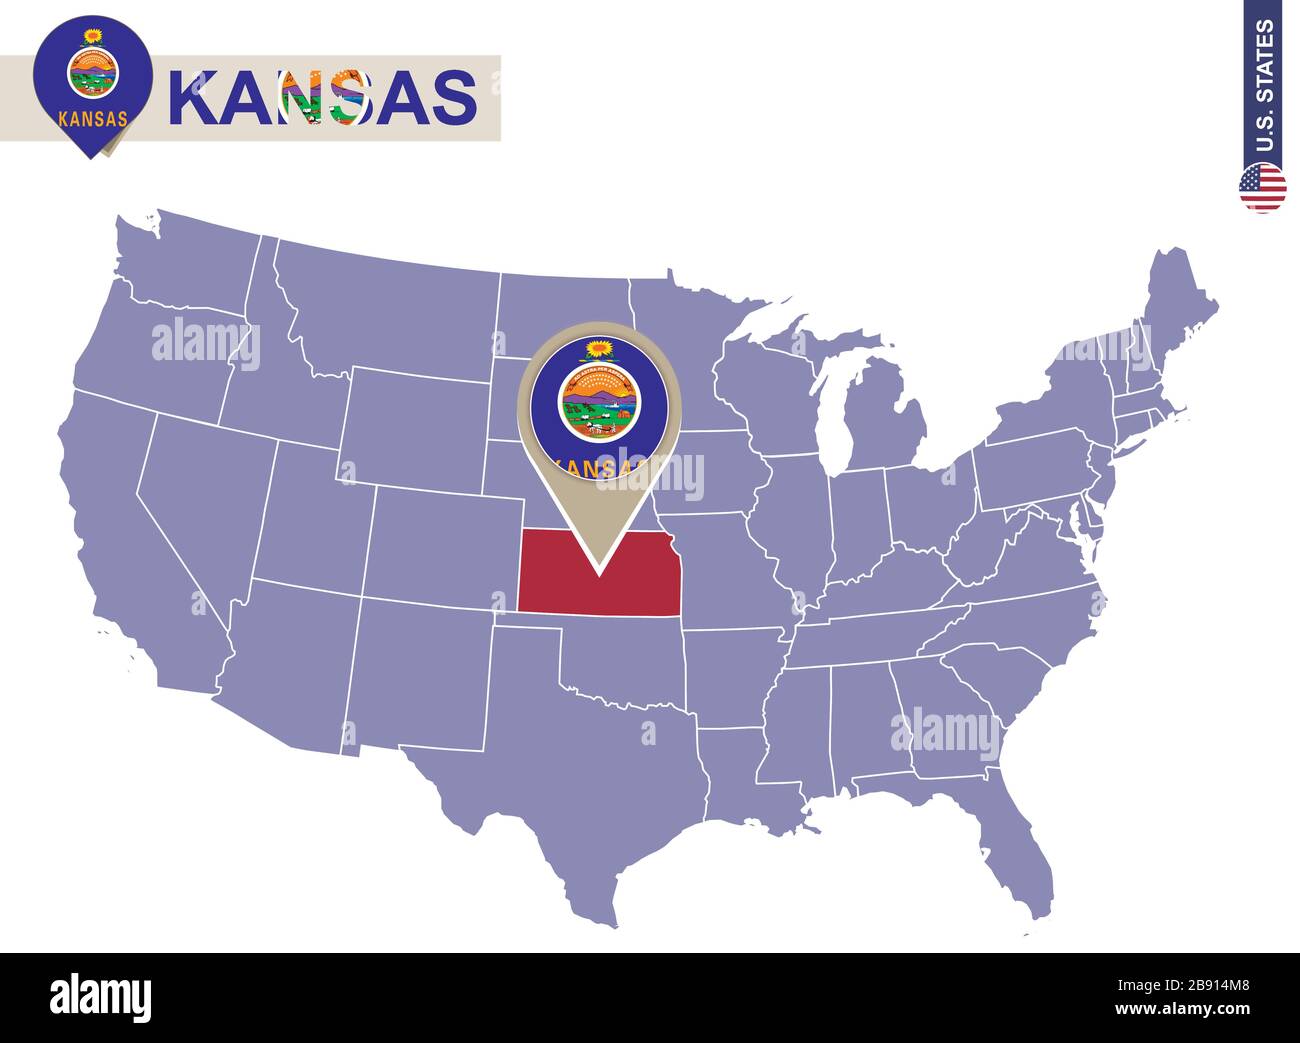 Kansas State on USA Map. Kansas flag and map. US States. Stock Vector